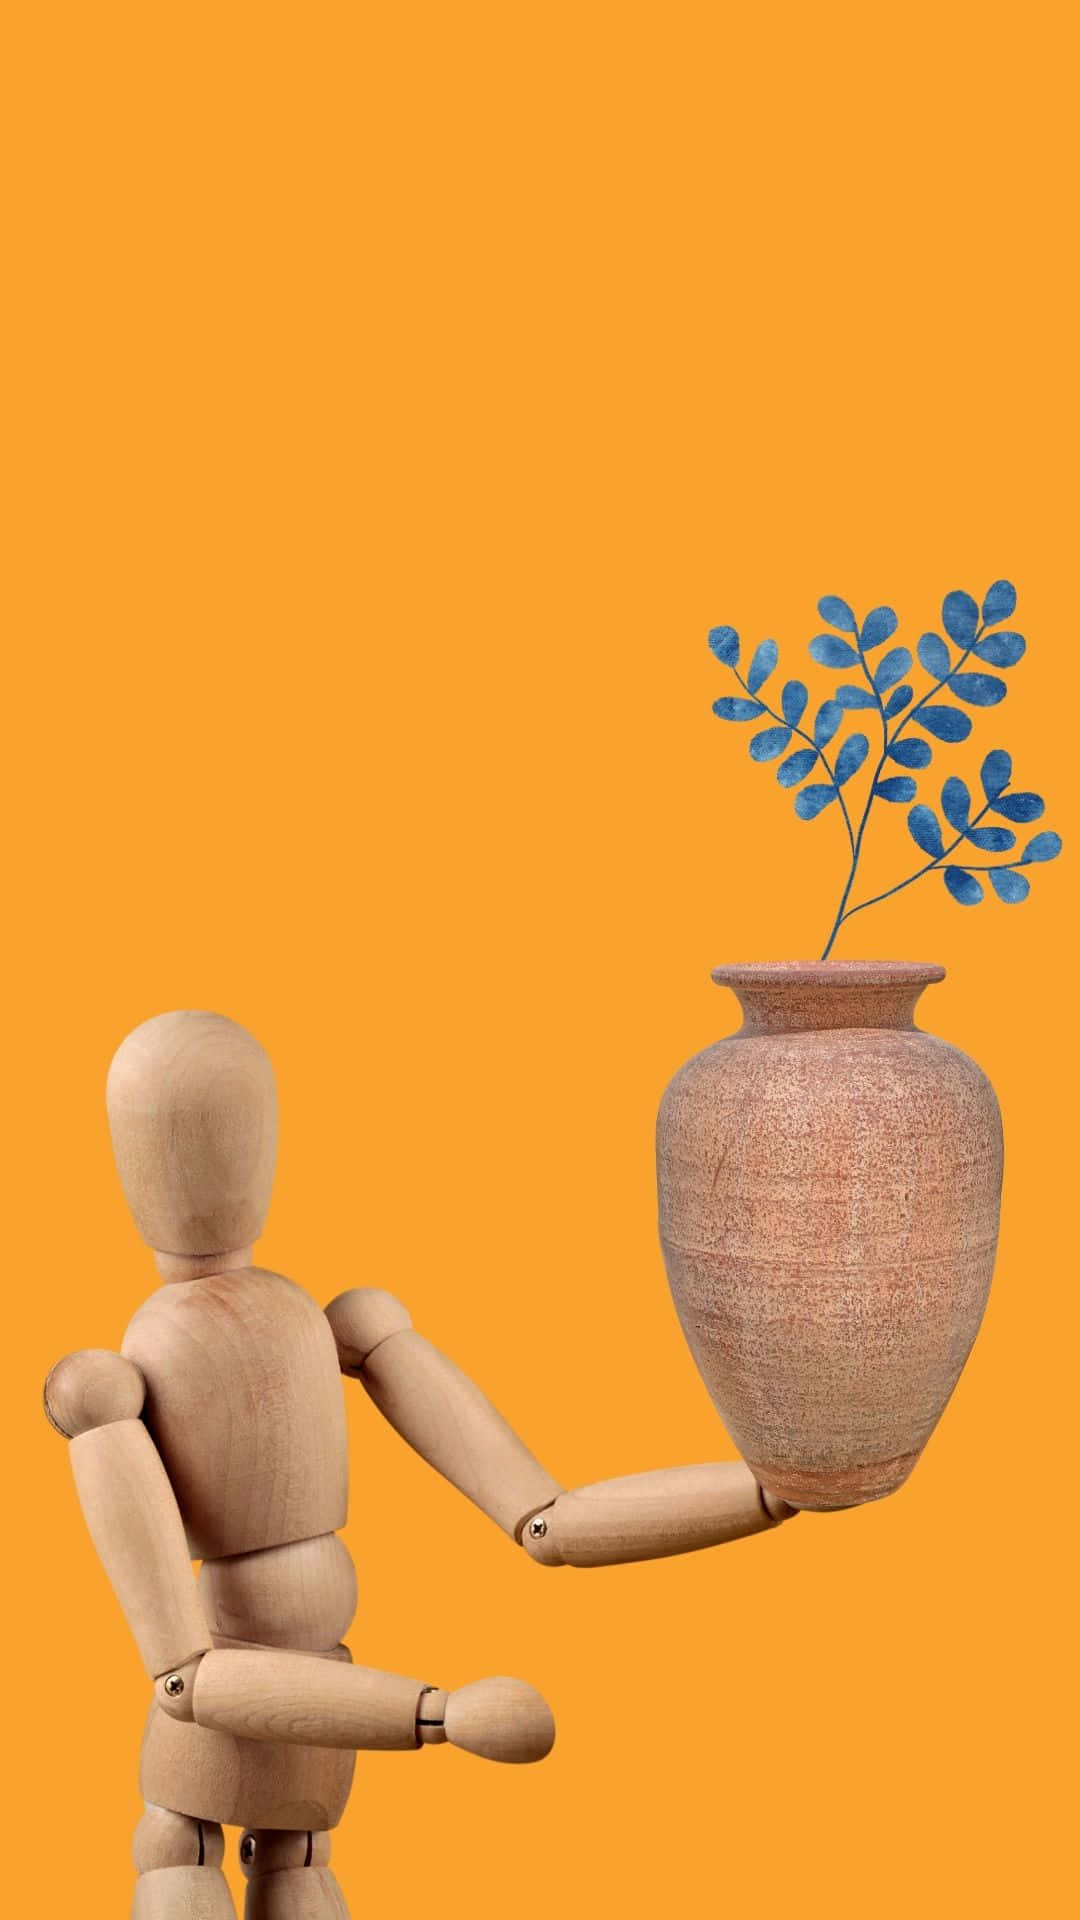 A Wooden Mannequin Holding A Pot Of Plants Wallpaper